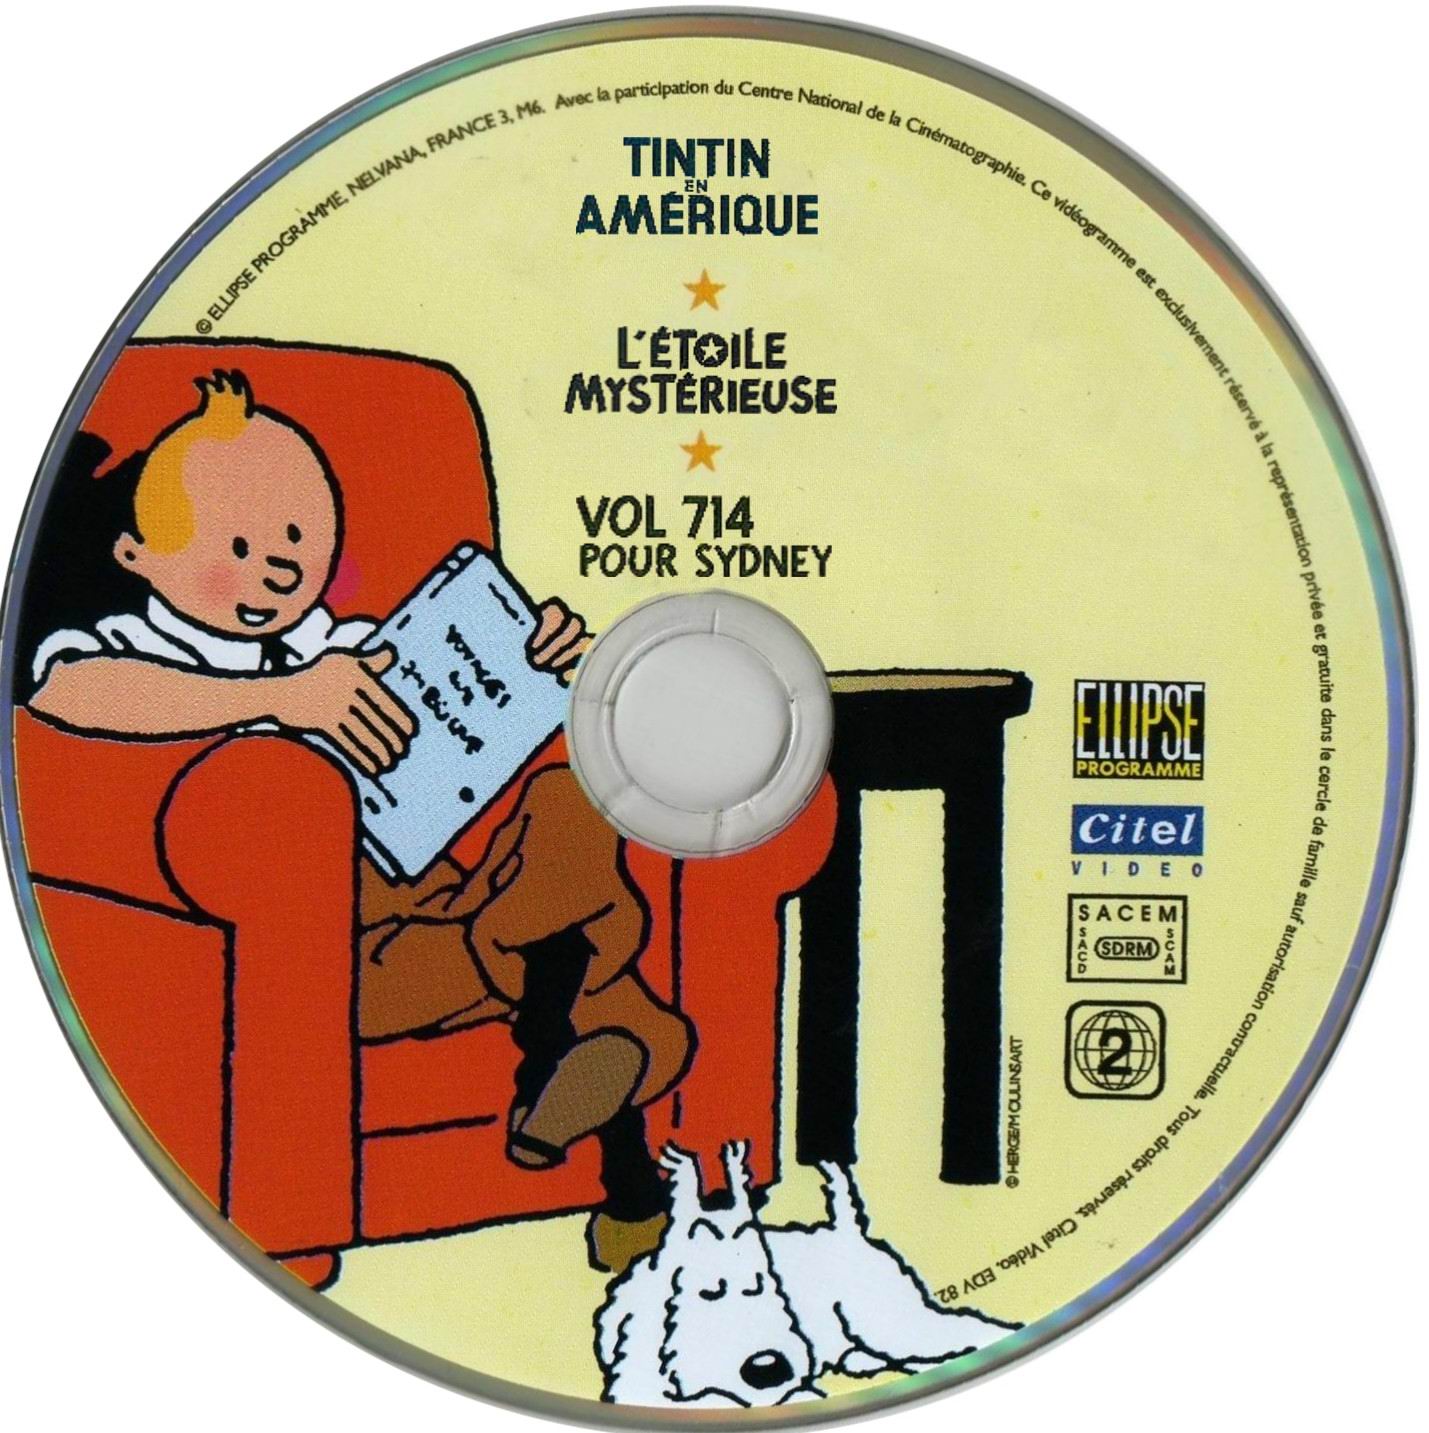 Tintin en amrique + L